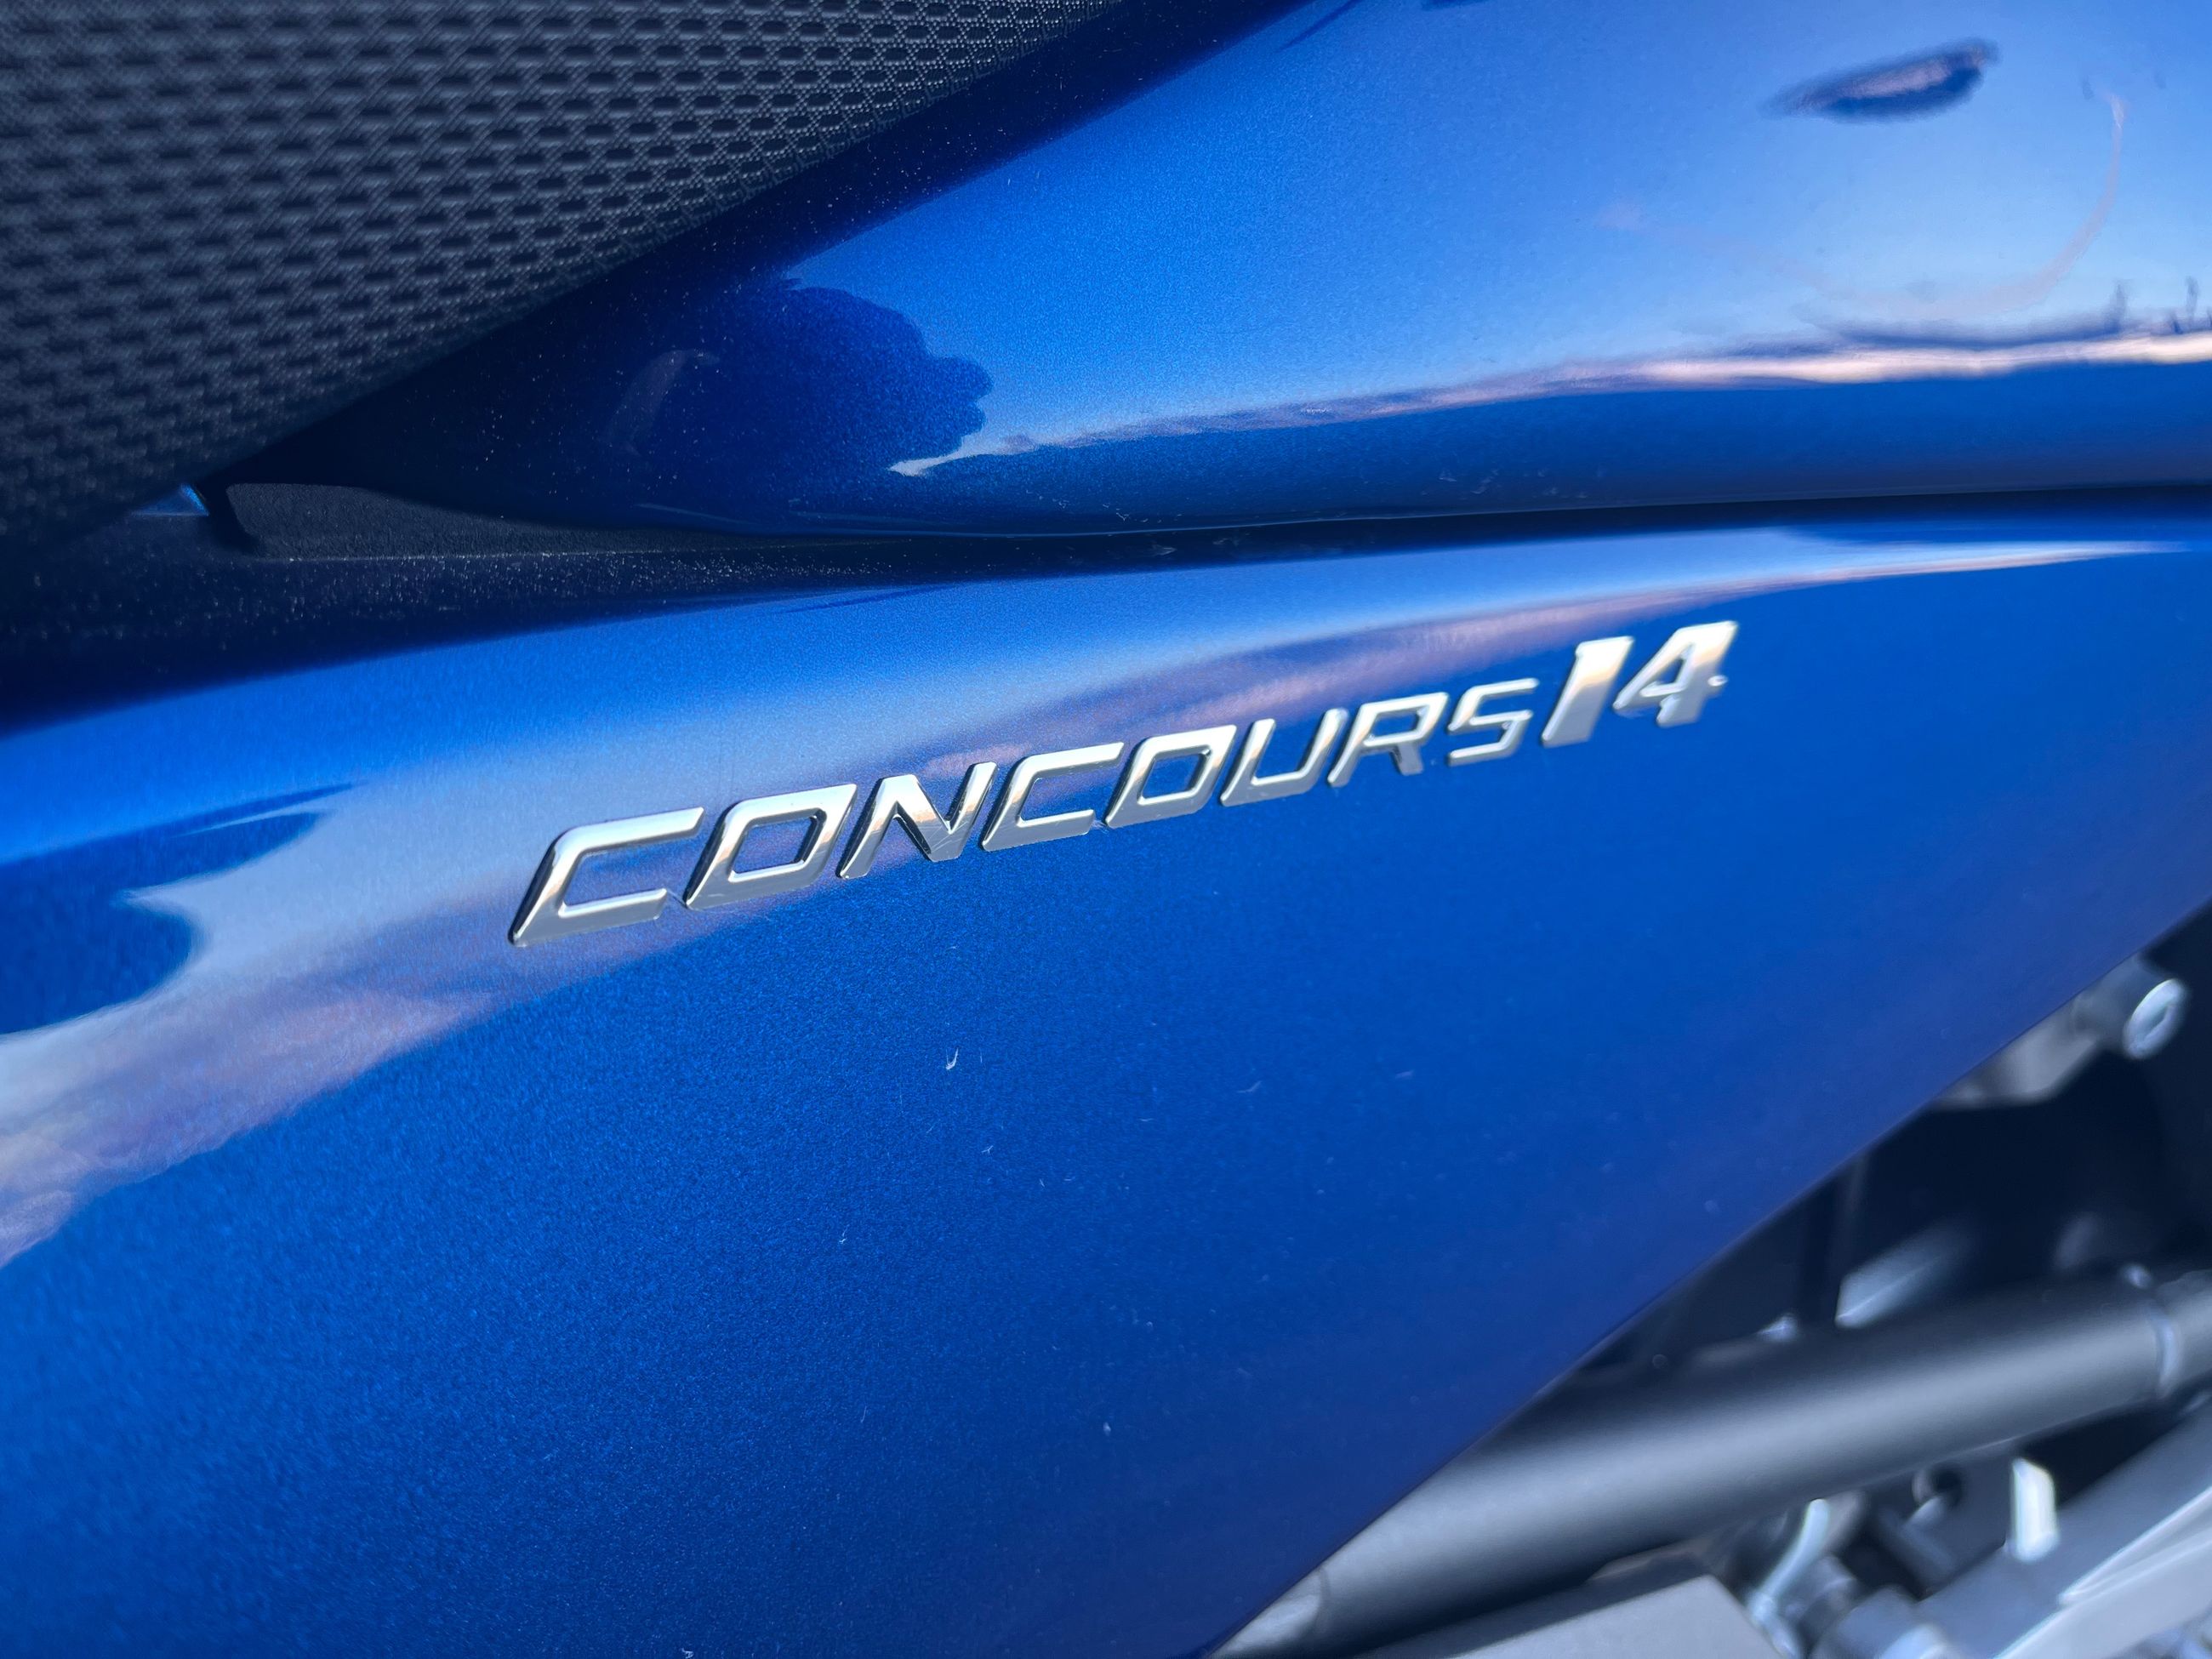 2017 Kawasaki CONCOURS 1400 ABS ZG 1400 sport touring